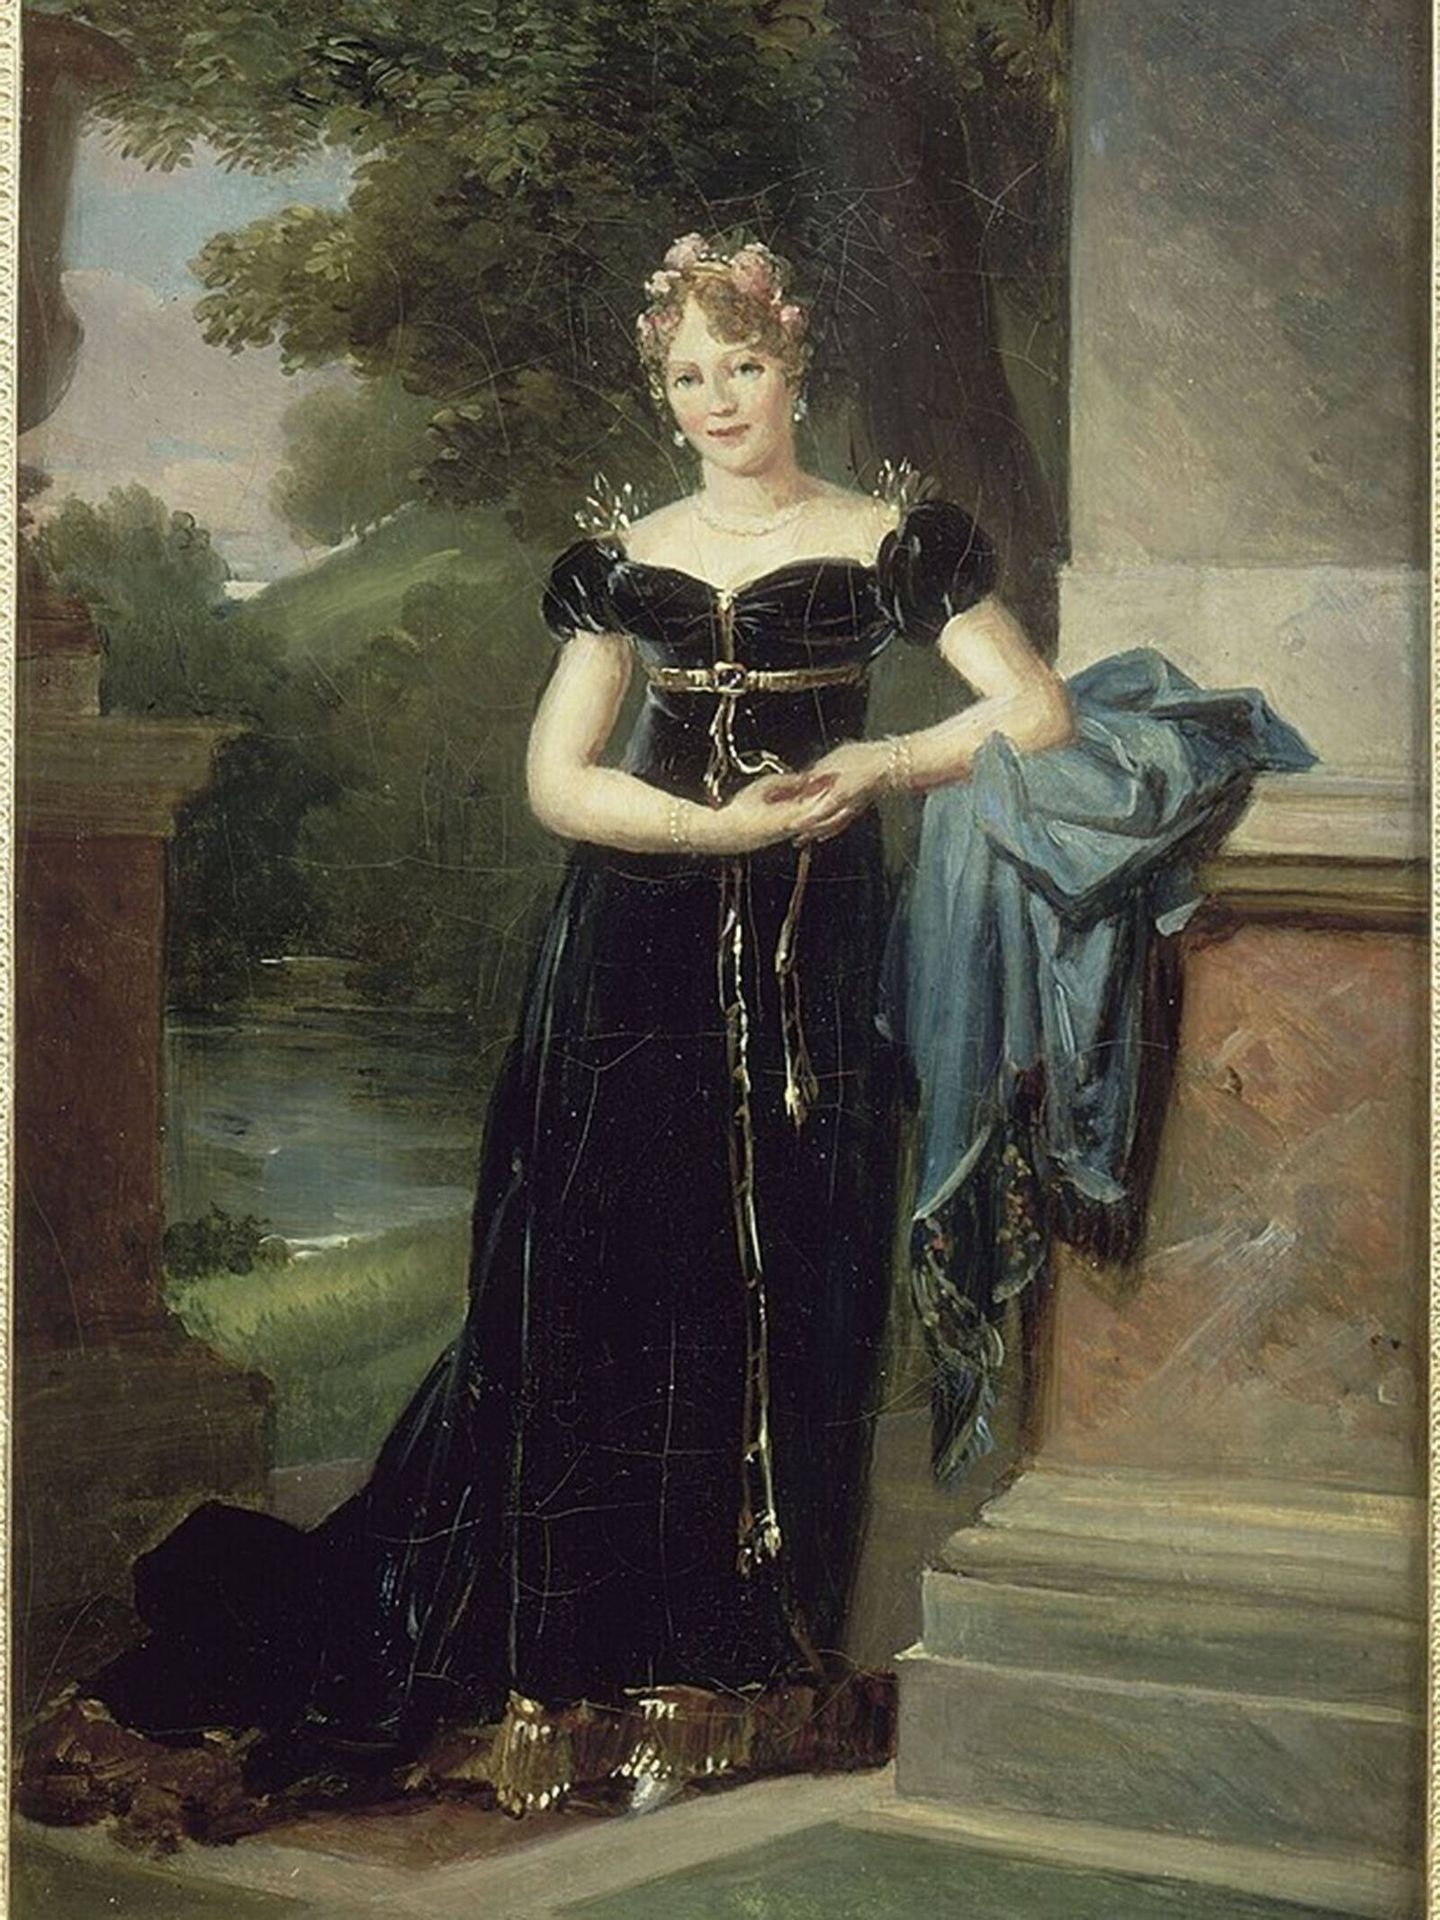 Retrato de María Waleska por François Gérard. (Colección Palacio de Versalles)